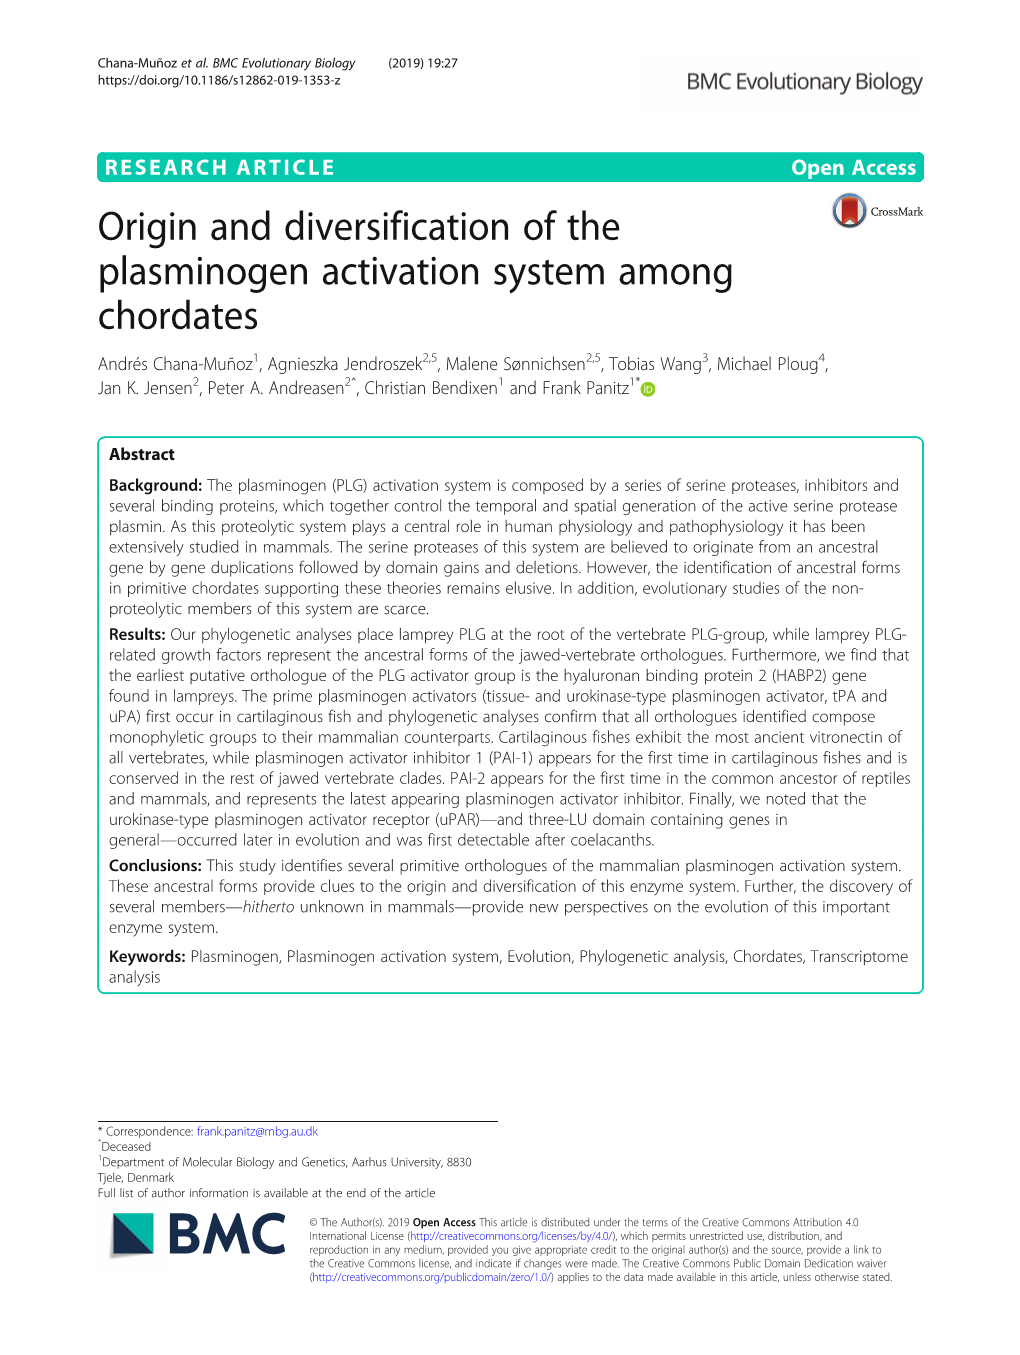 Origin and Diversification of the Plasminogen Activation System